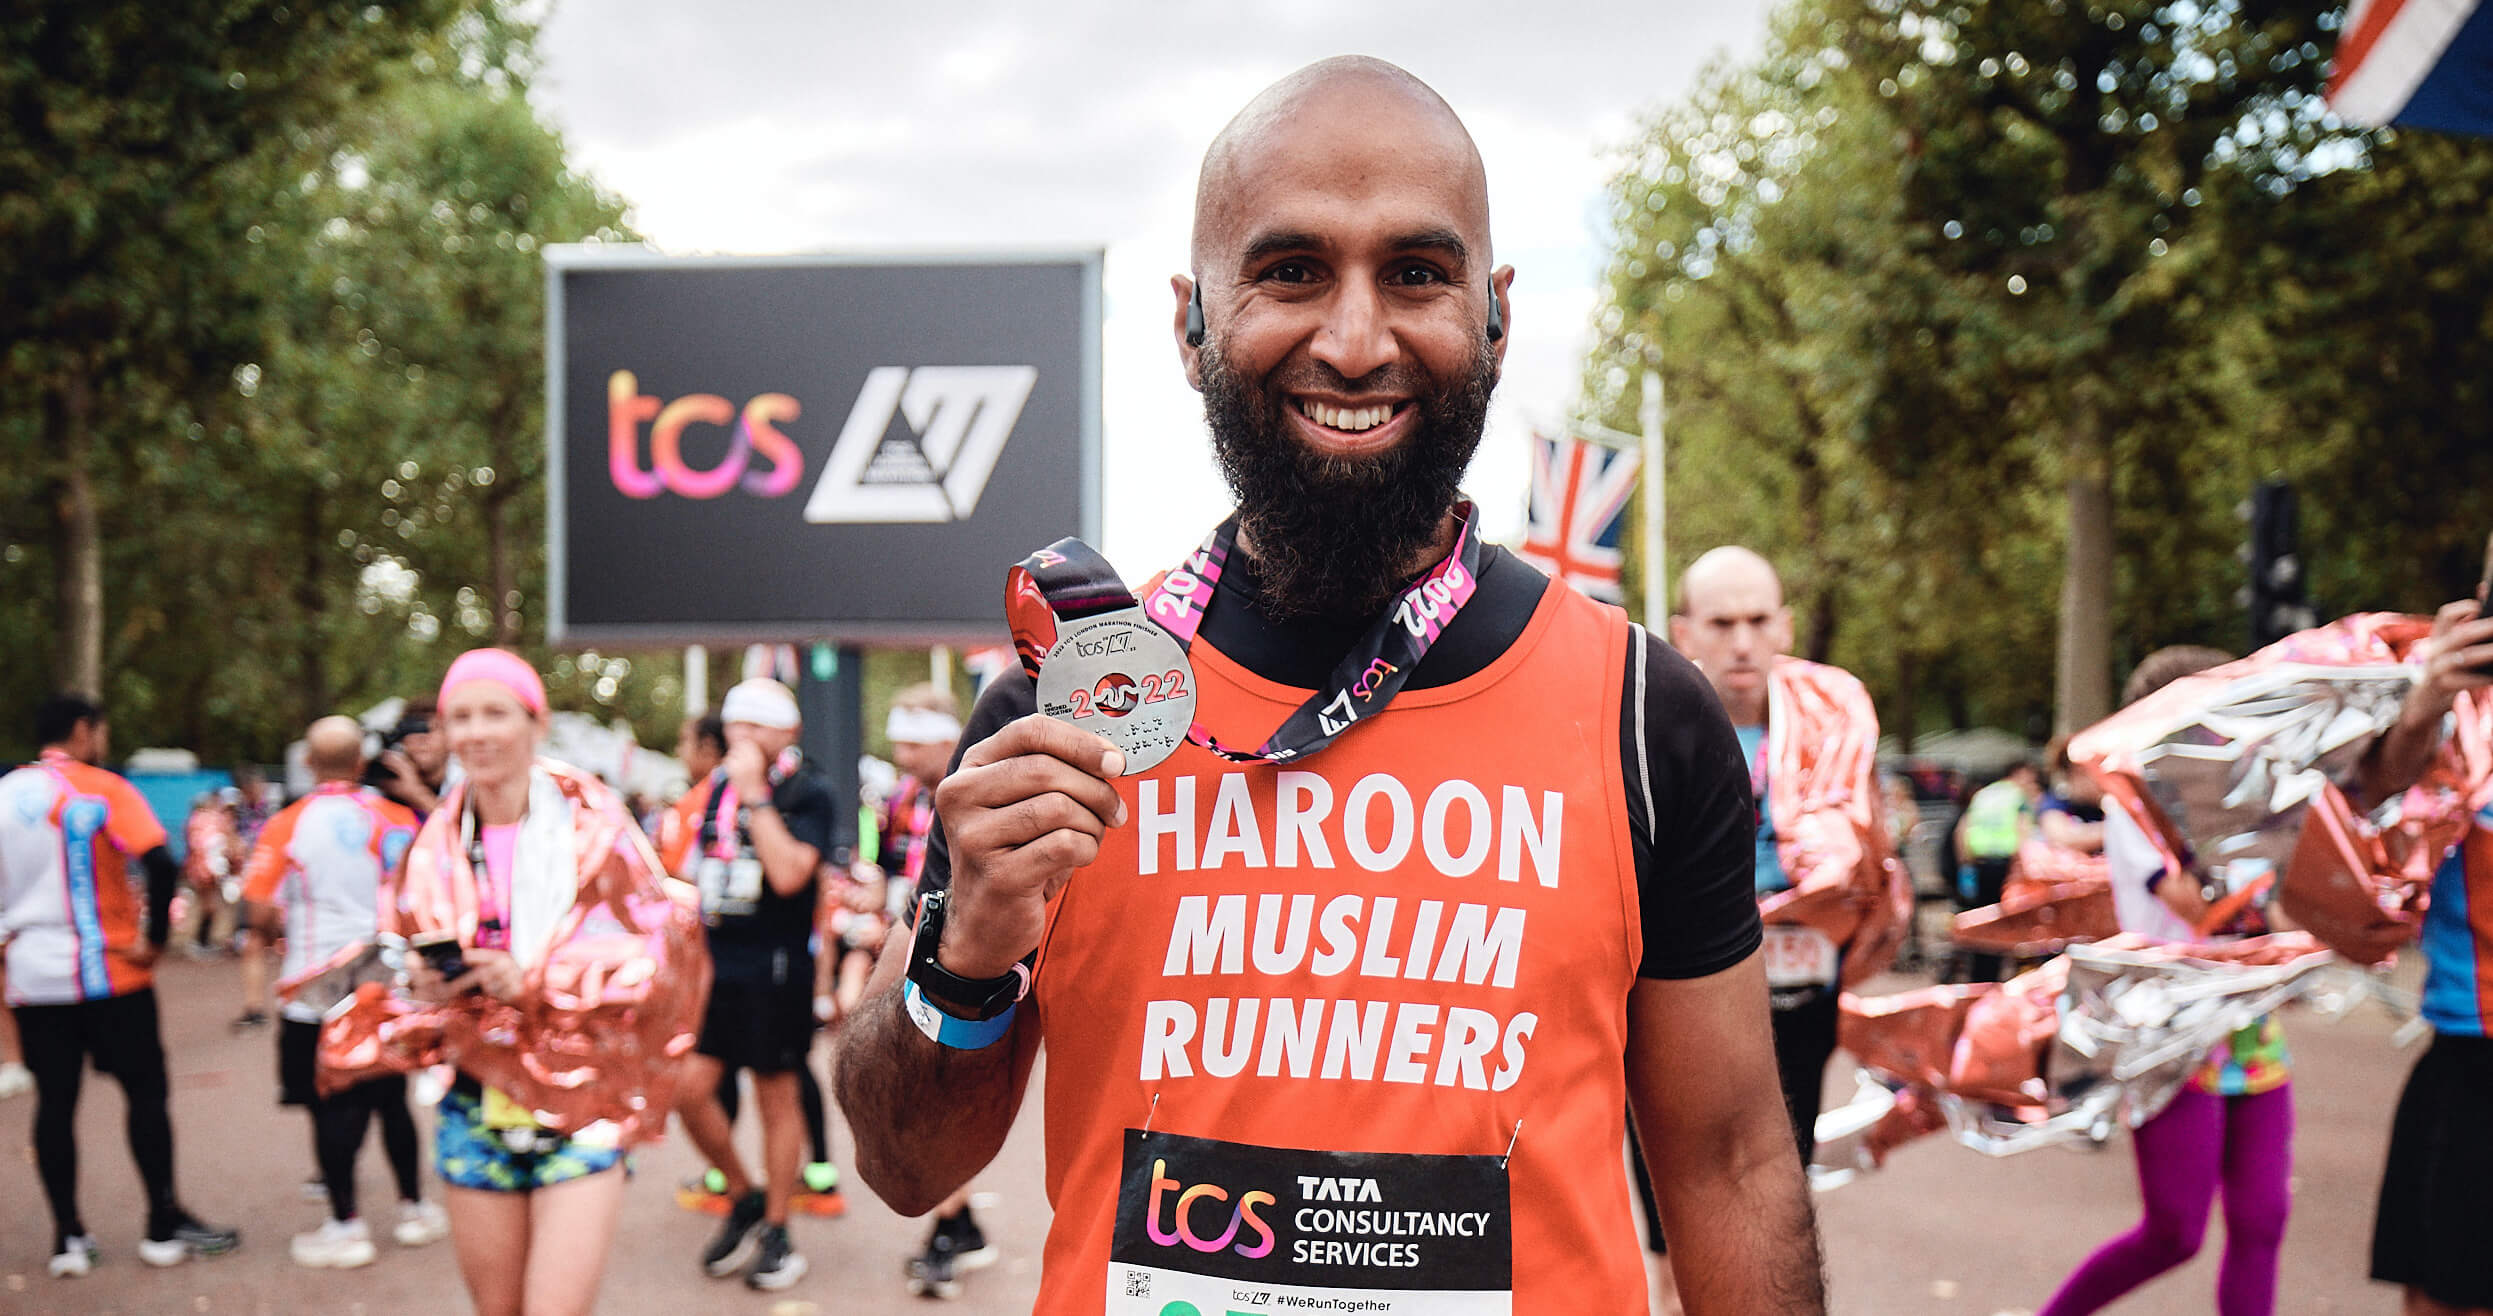 Haroon Mota at the Finish Line of the TCS London Marathon